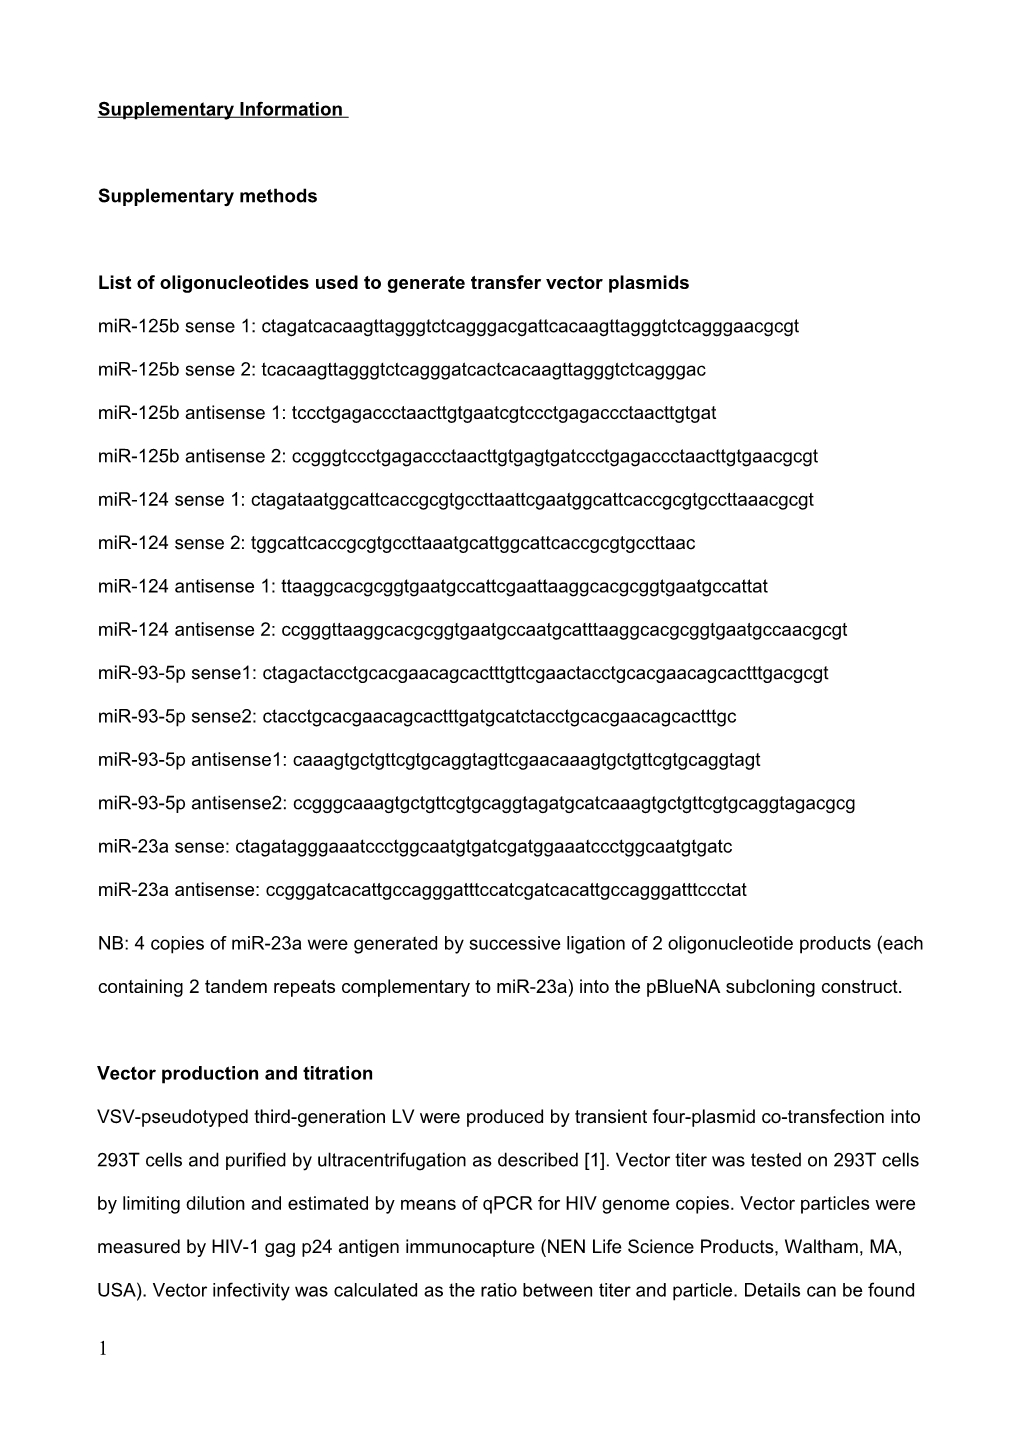 List of Oligonucleotides Used to Generate Transfer Vector Plasmids